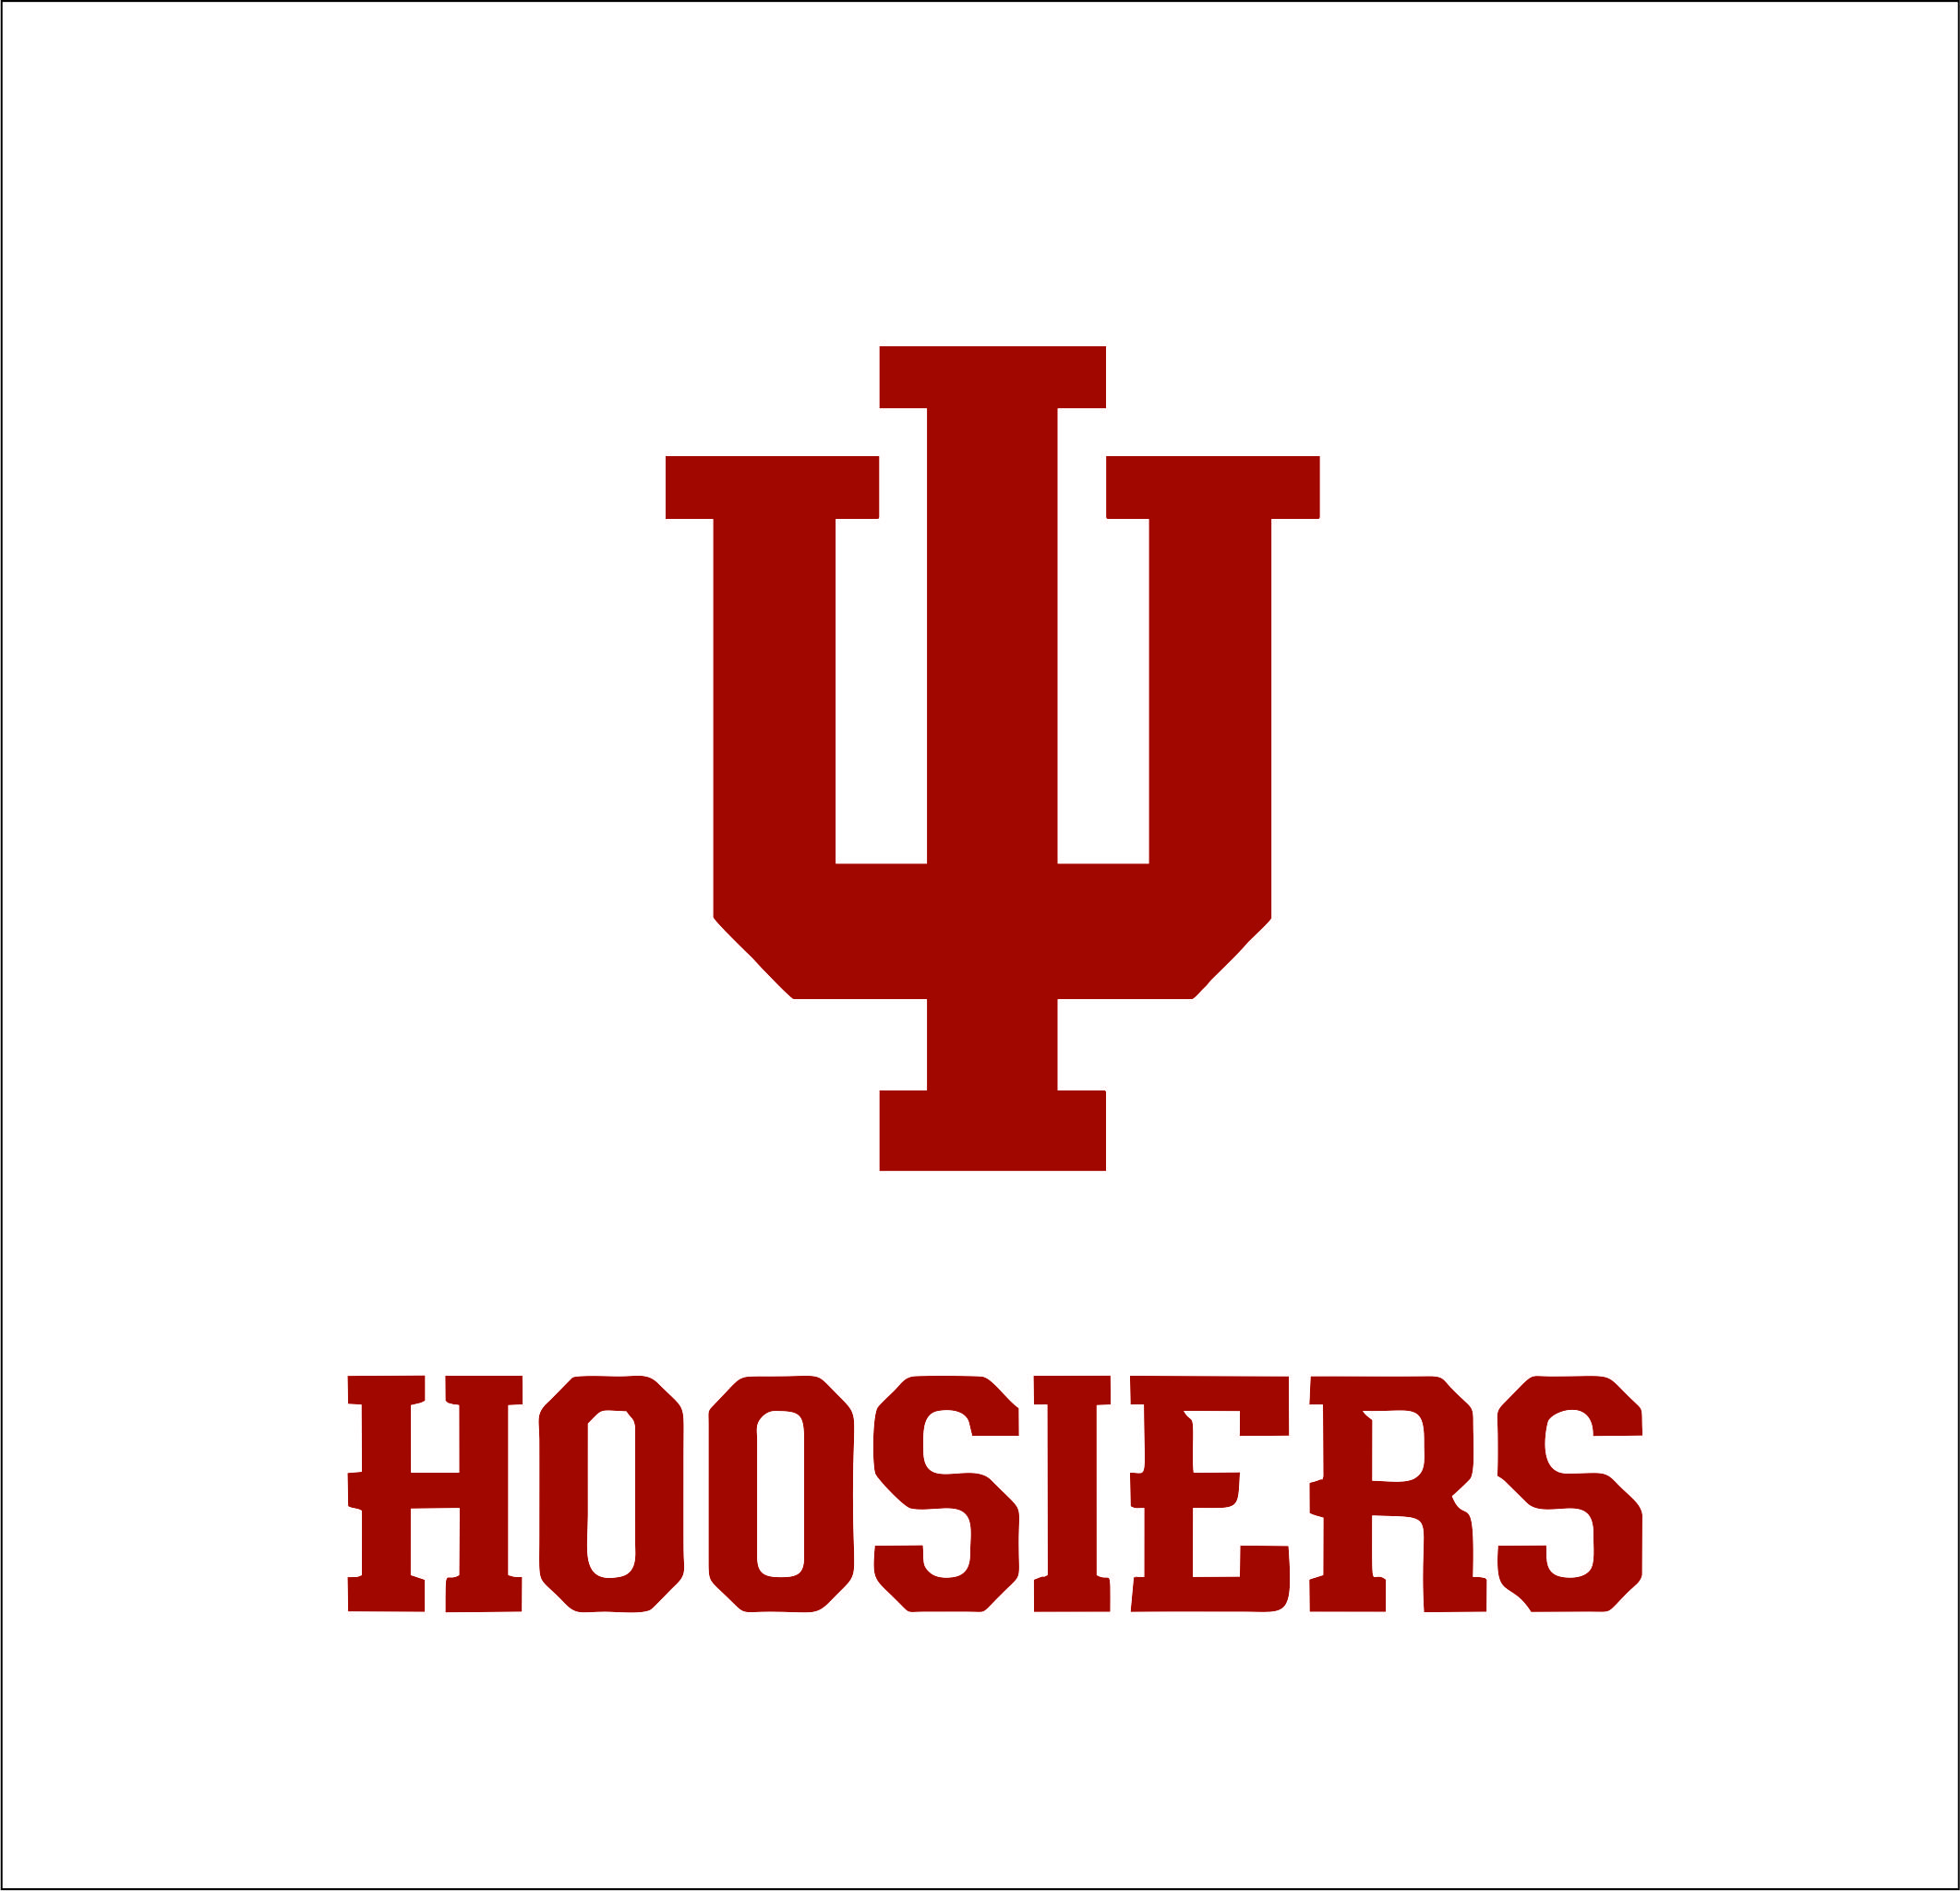 Indiana Hoosiers logo SVGprinted